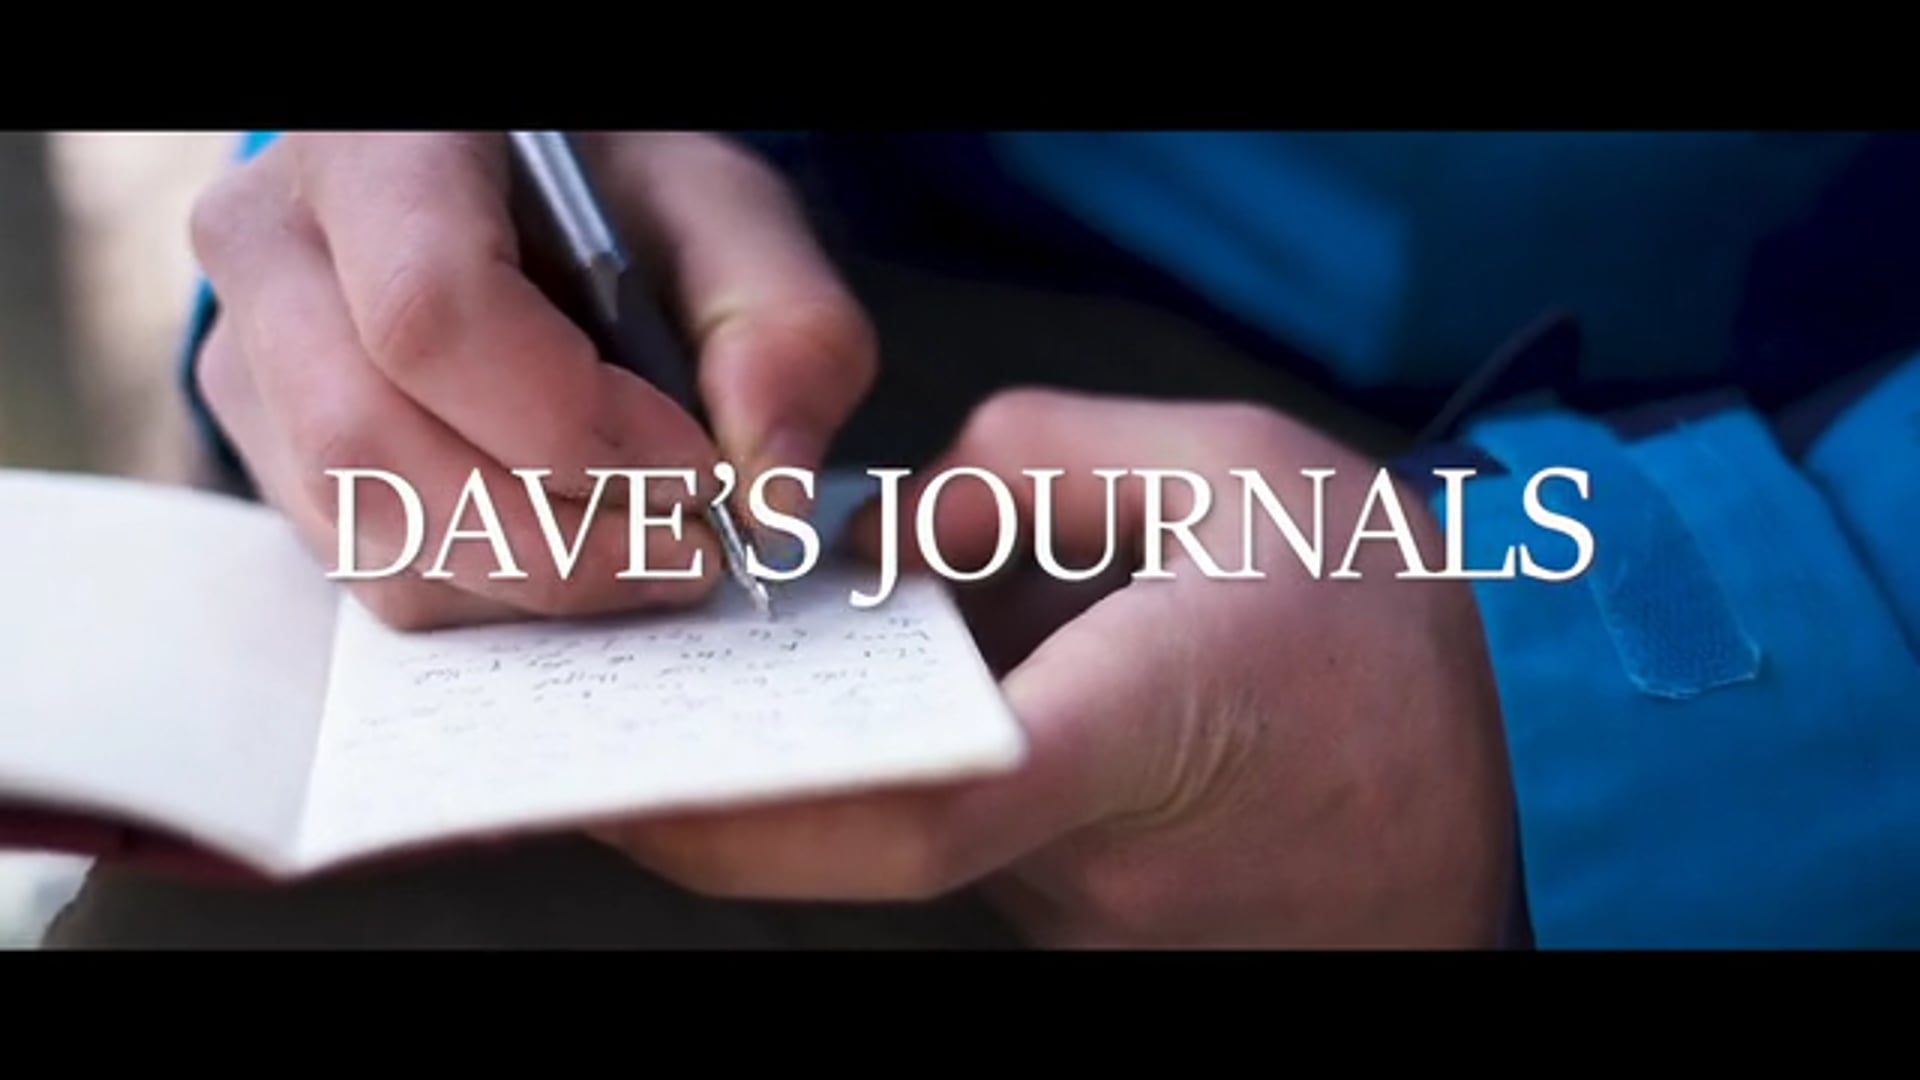 Dave's Journals